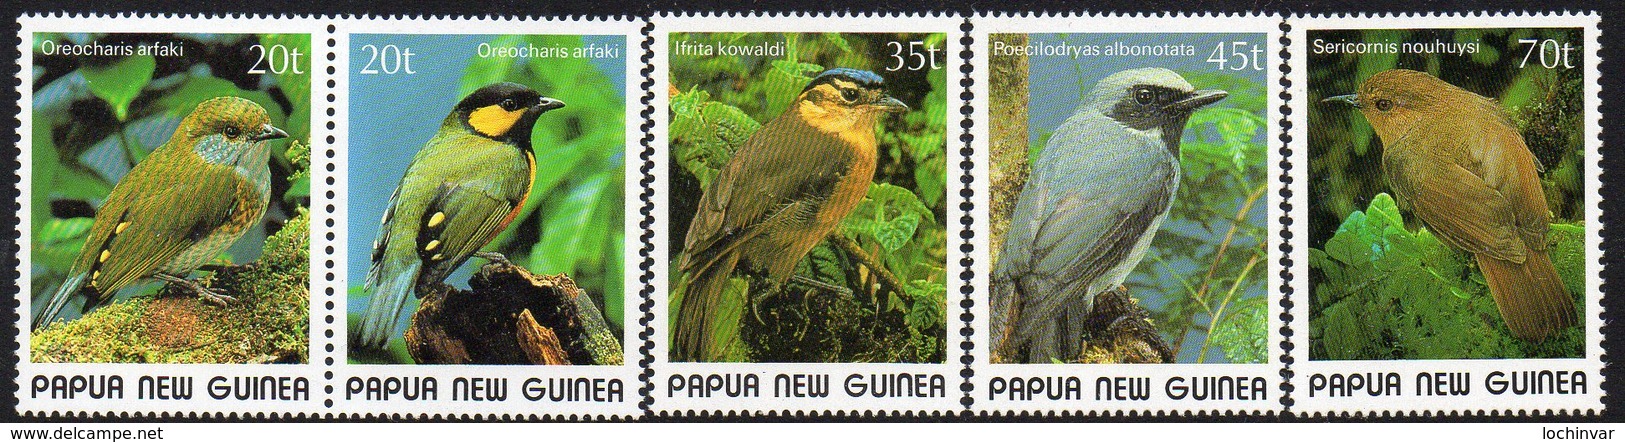 PAPUA NEW GUINEA, 1989 SMALL BIRDS 5 MNH - Papua New Guinea